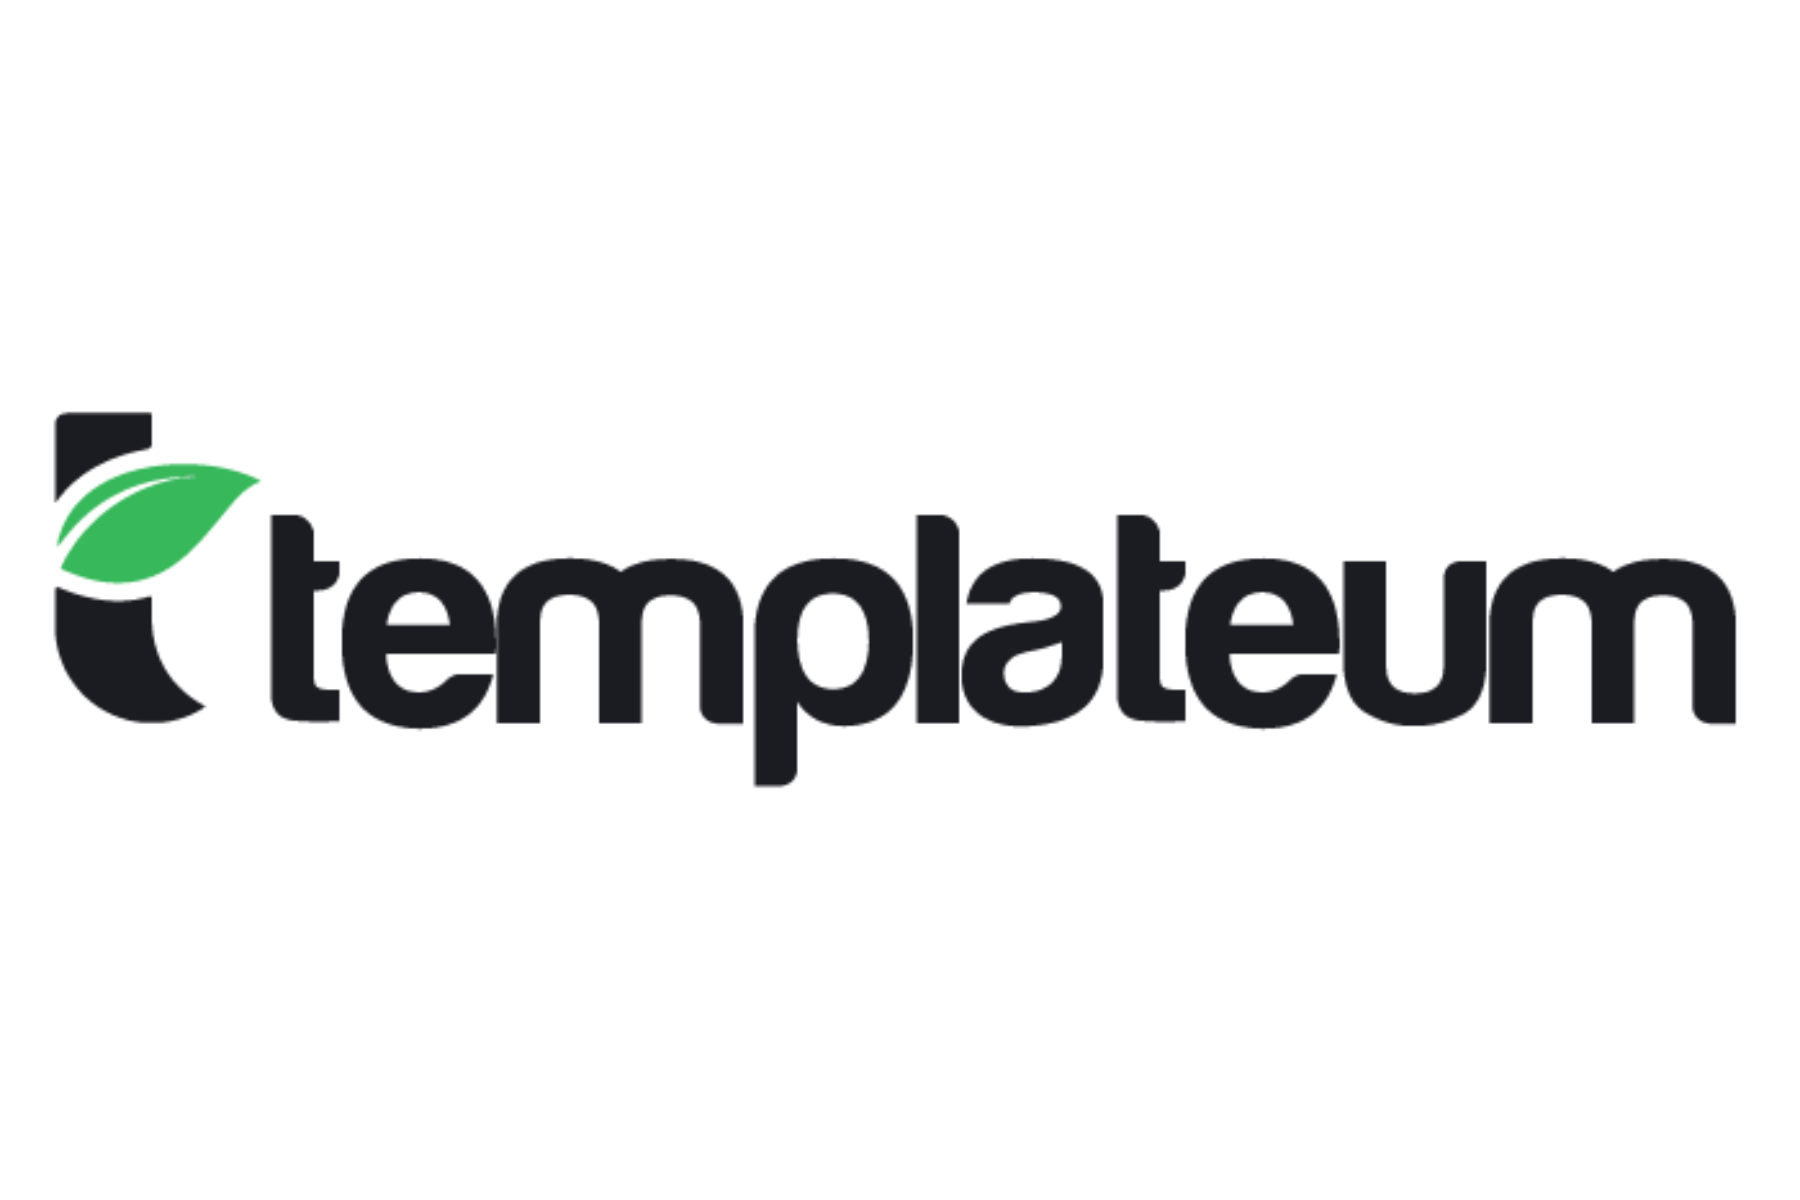 relevant-templateum-logo.png